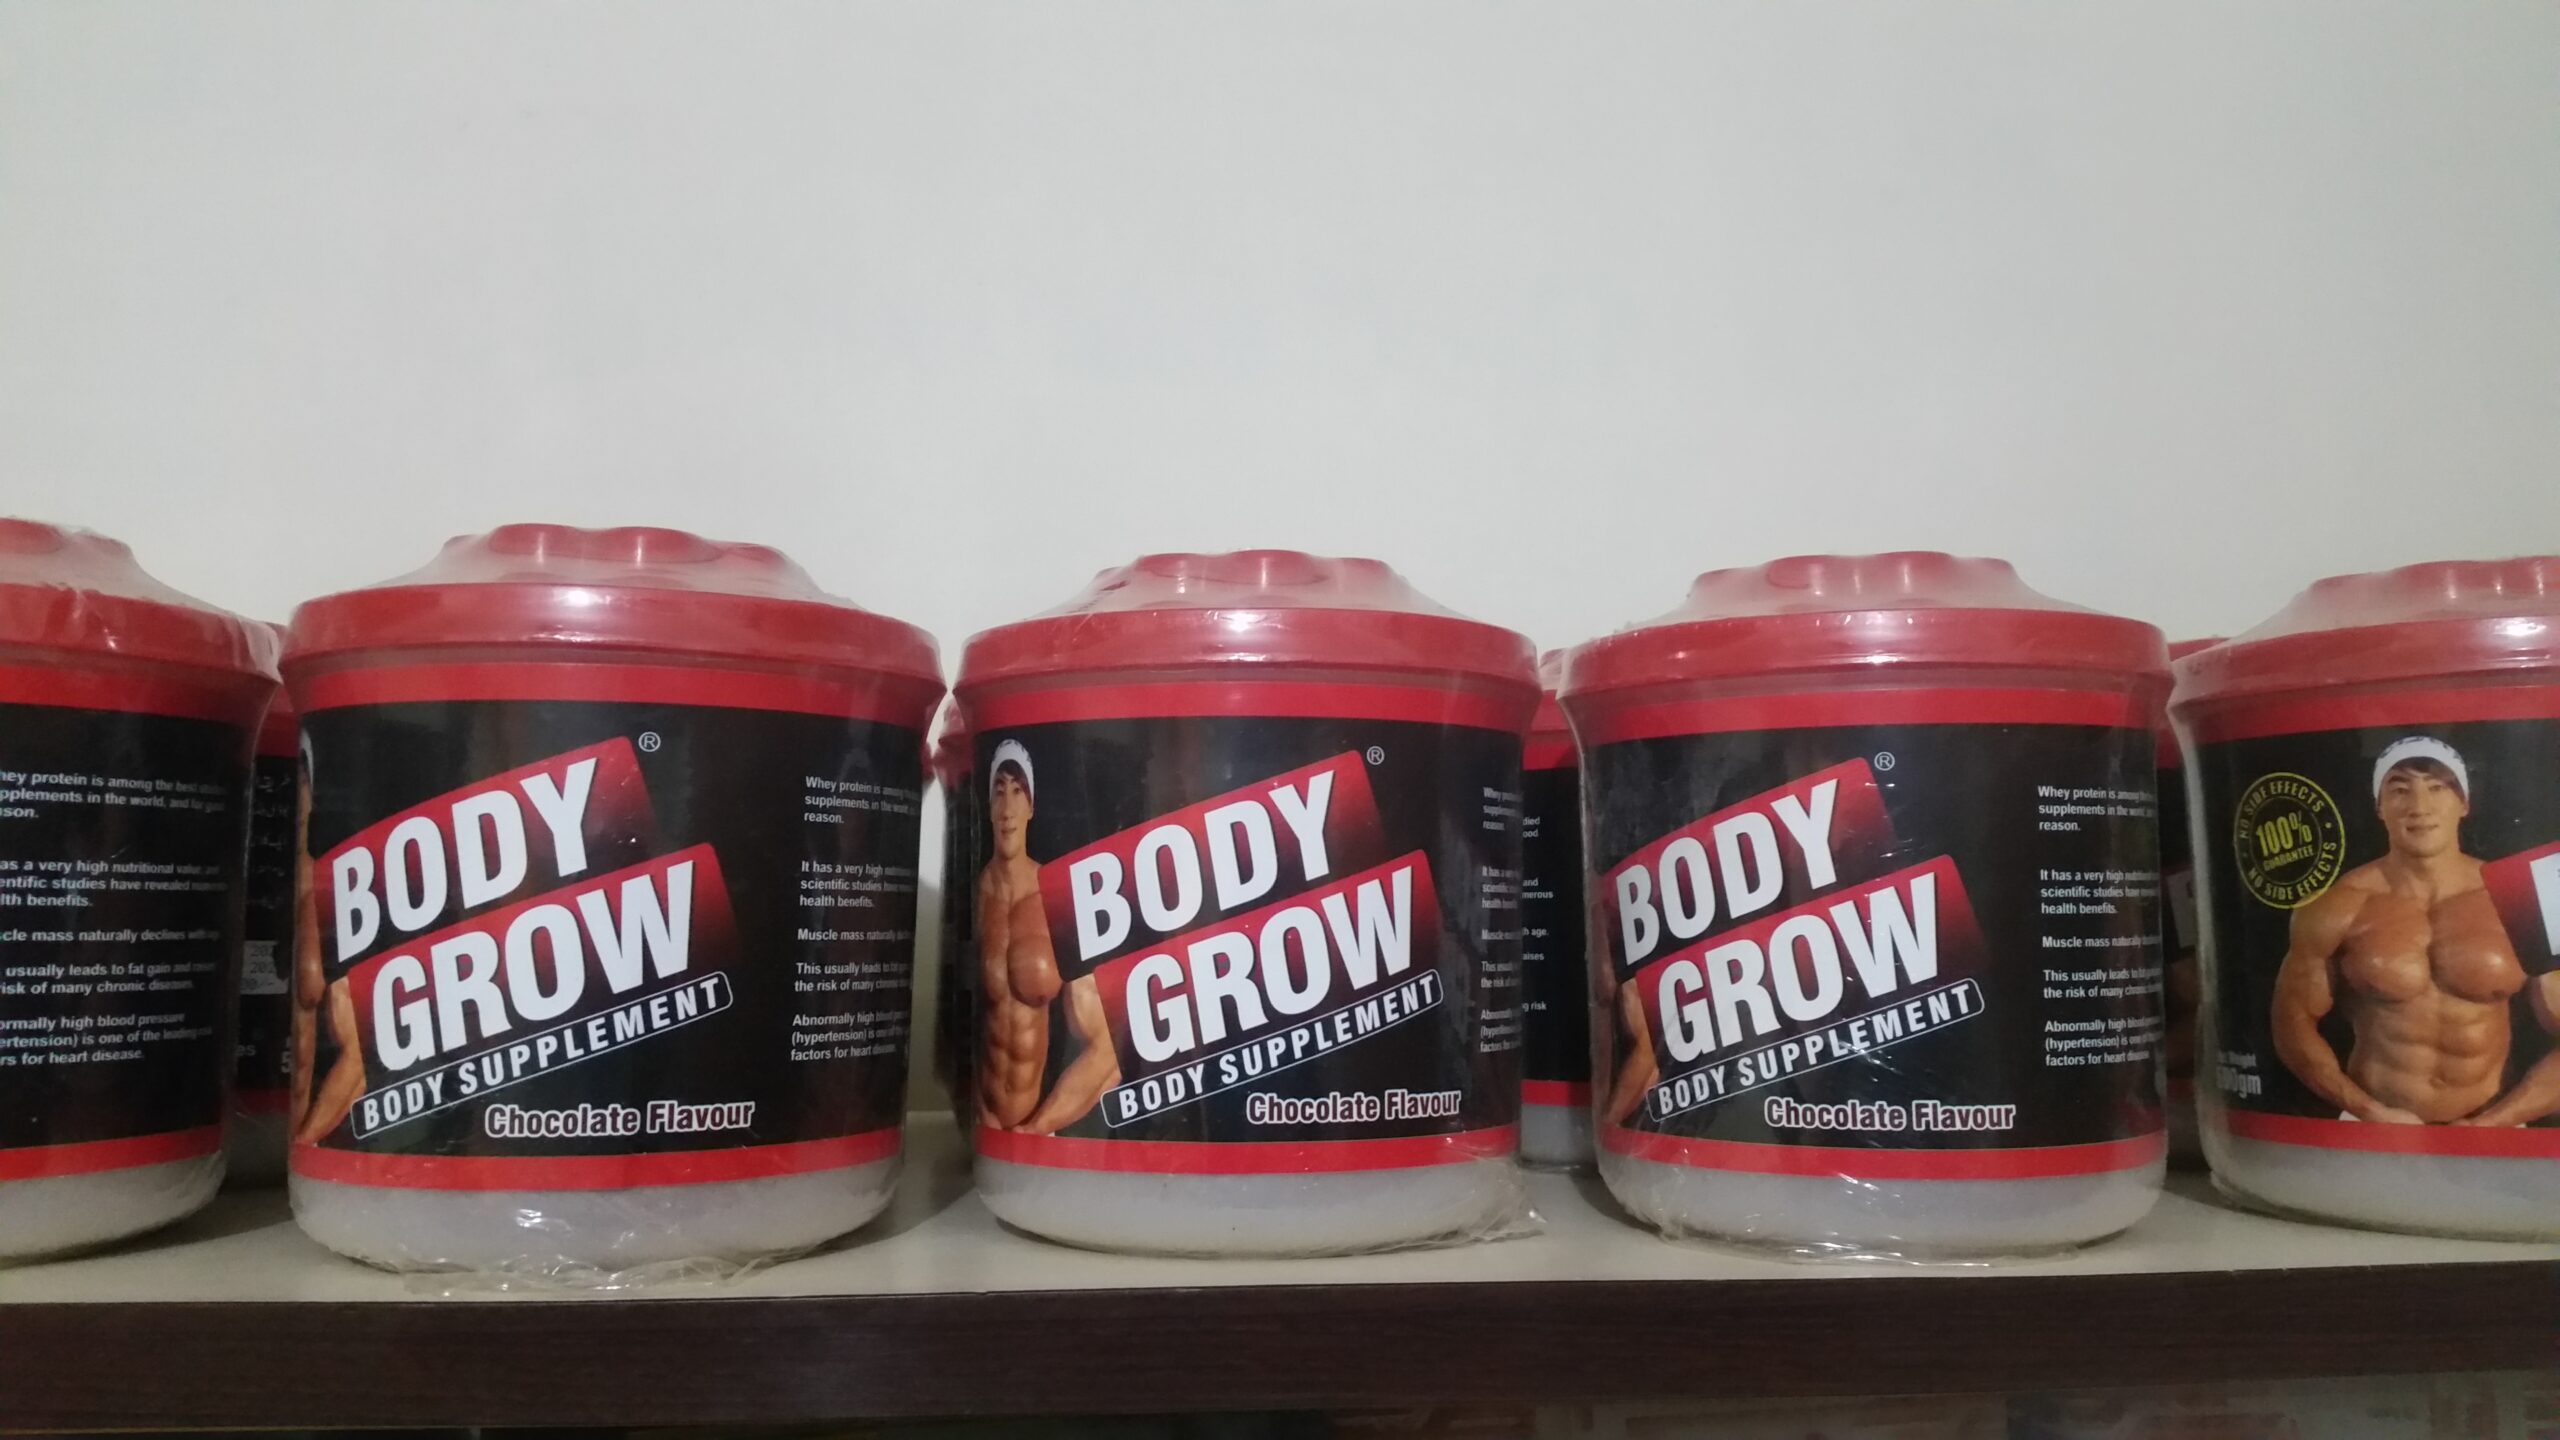 Body grow